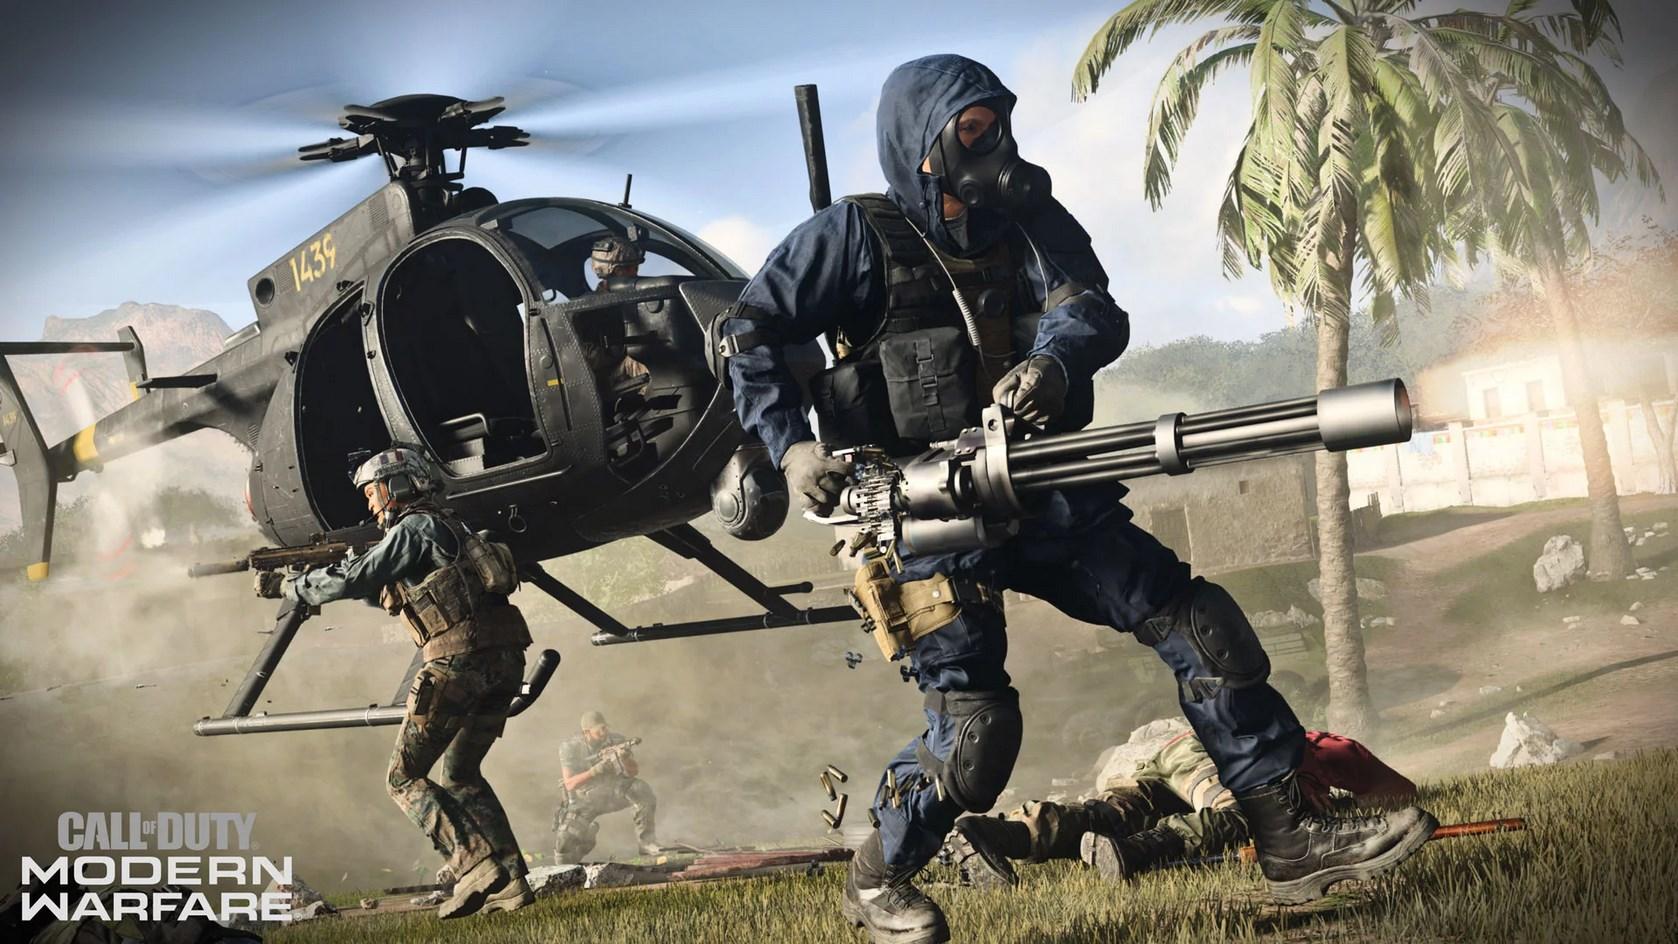 Player firing a minigun in Modern Warfare.